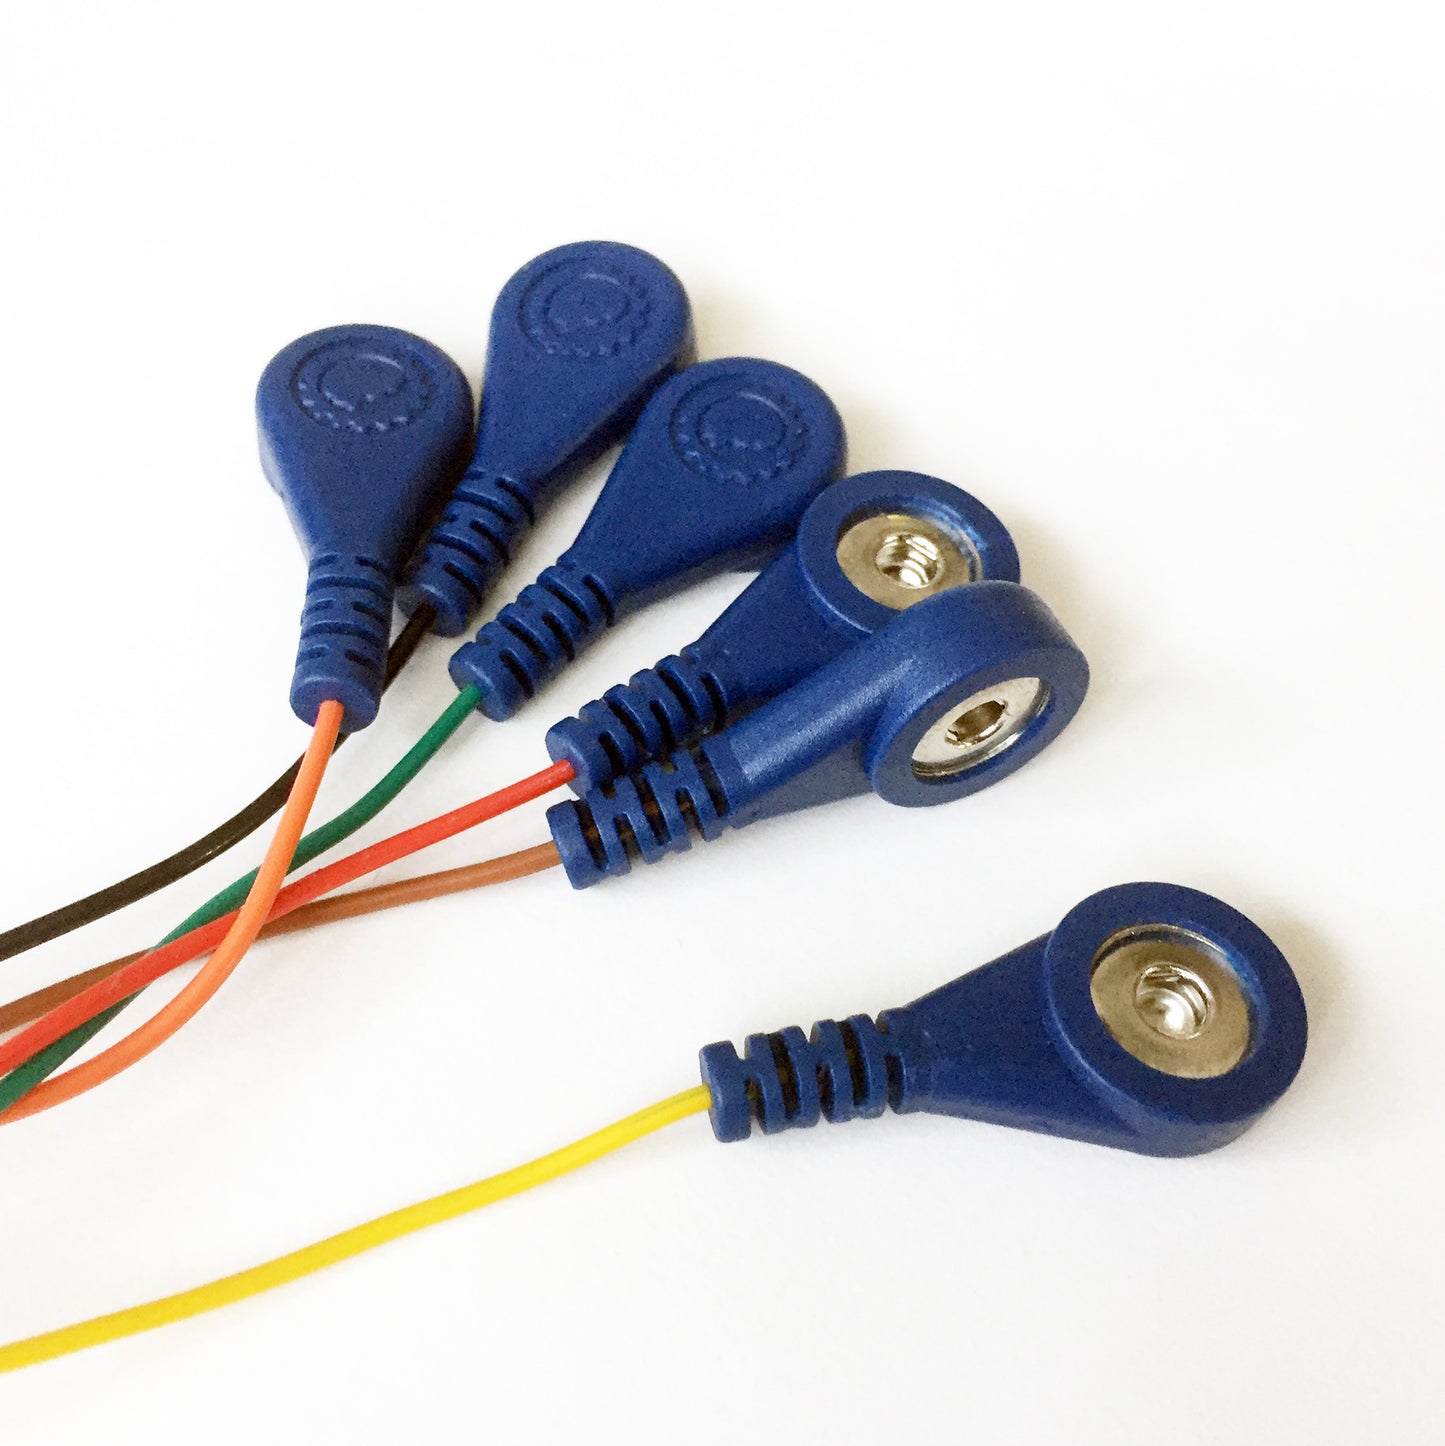 EMG/ECG Snap Electrode Cables – OpenBCI Online Store